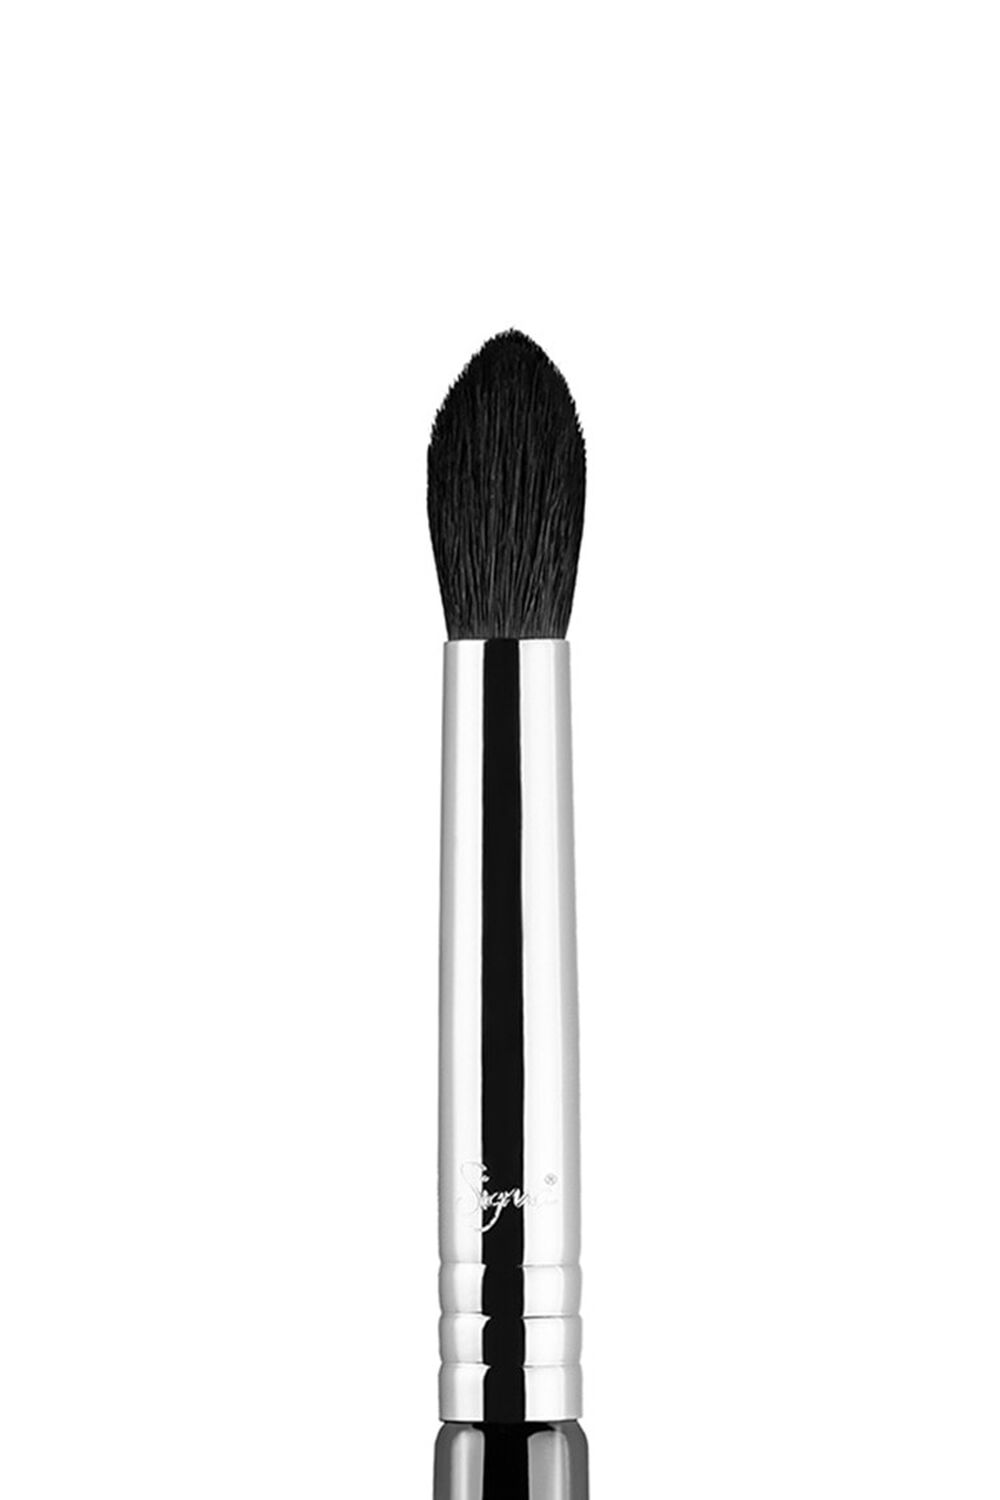 Sigma Beauty E45 – Small Tapered Blending Brush, image 2